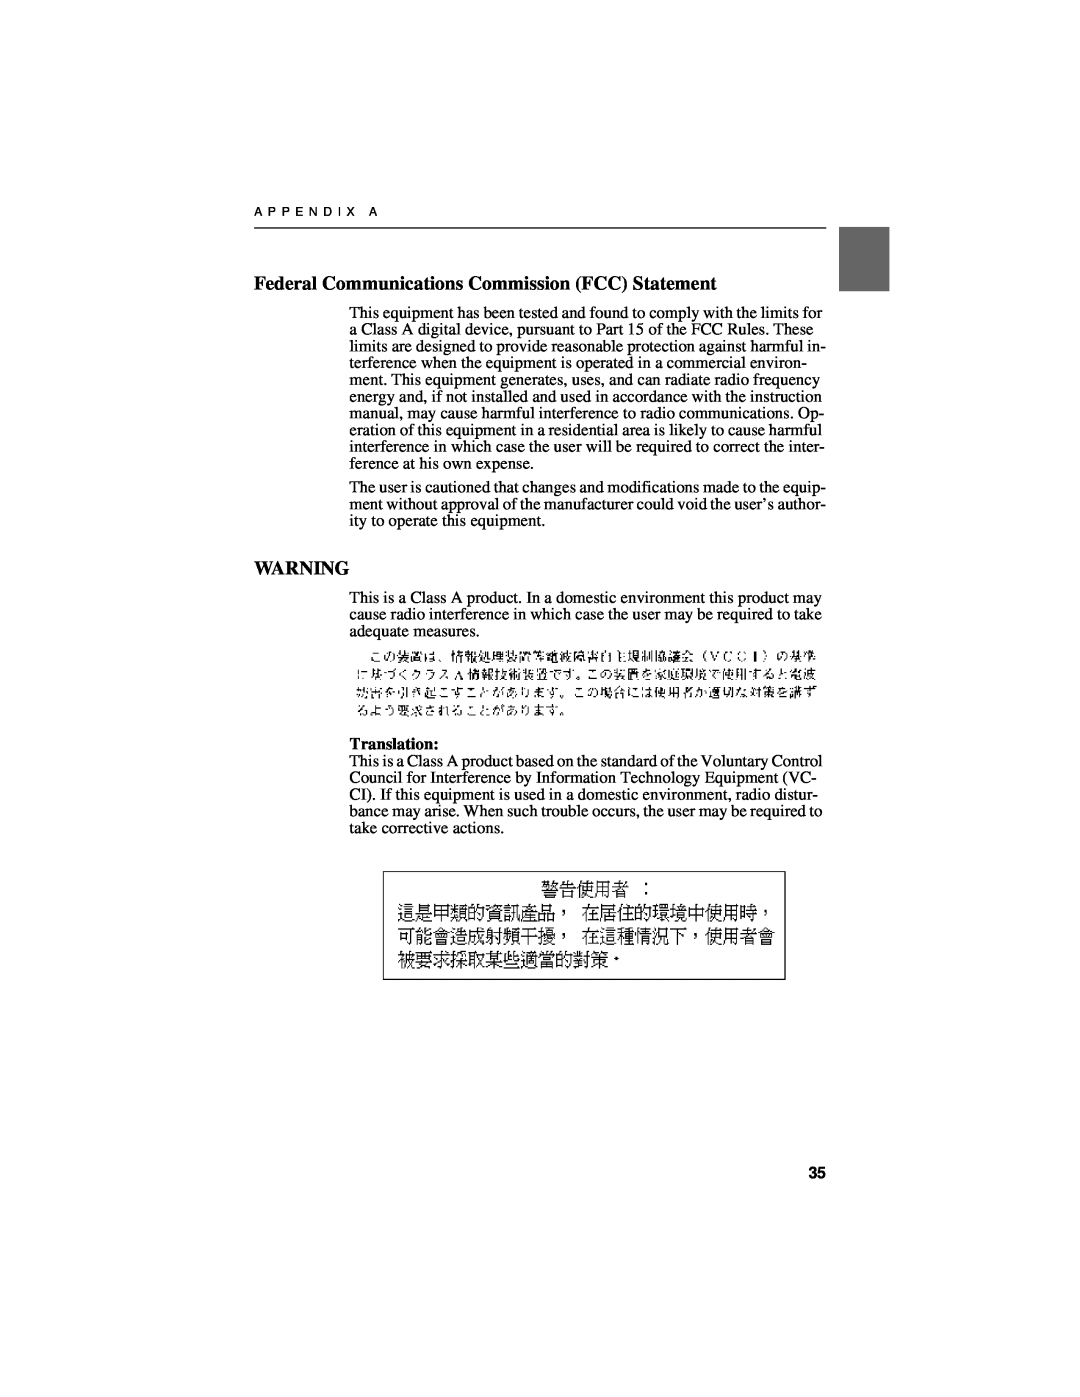 Intel 1000SX manual Federal Communications Commission FCC Statement, Translation 